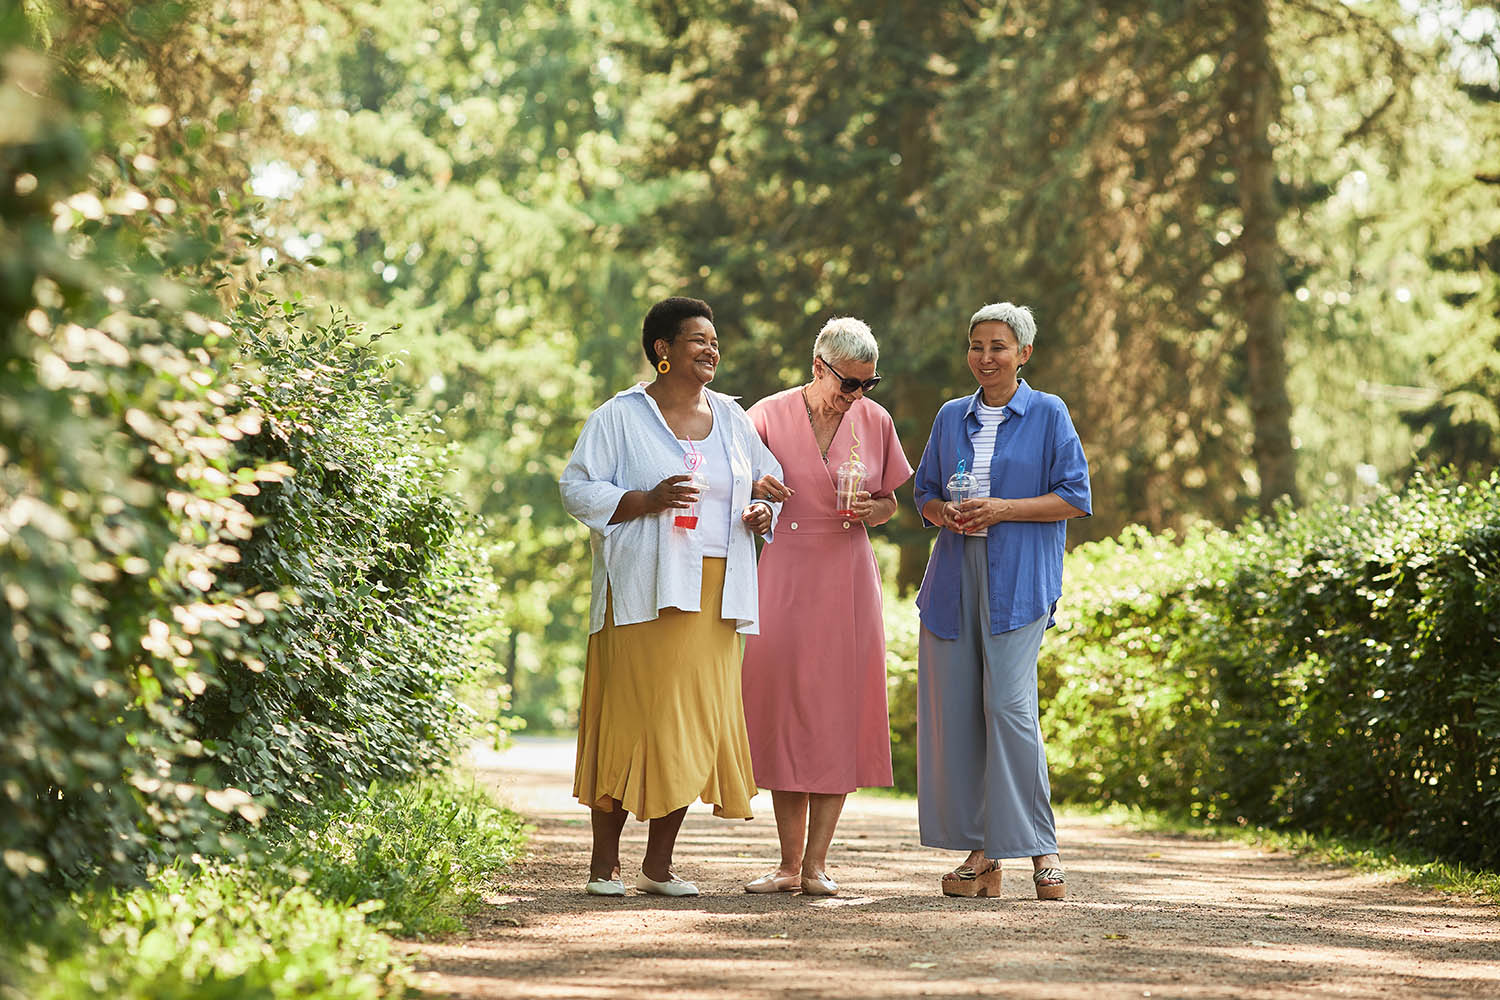 Group of cheerful senior women walking towards camera in park and enjoying summer